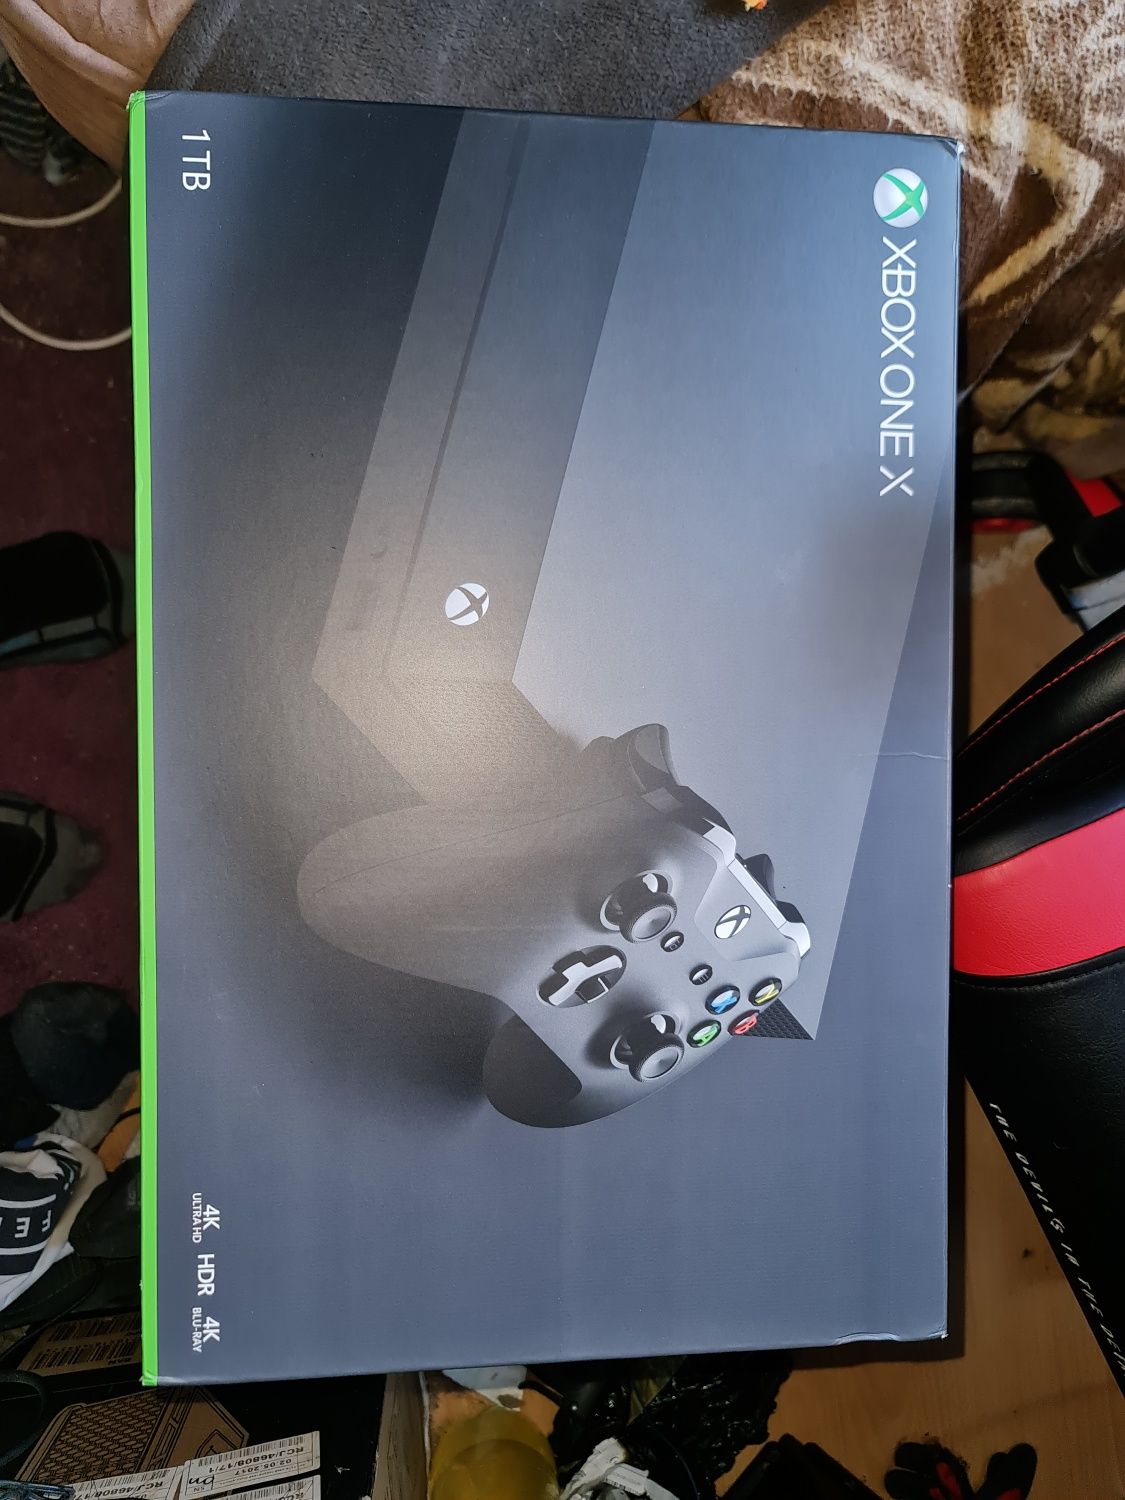 Xbox one x pad + akumulator do pada + gry